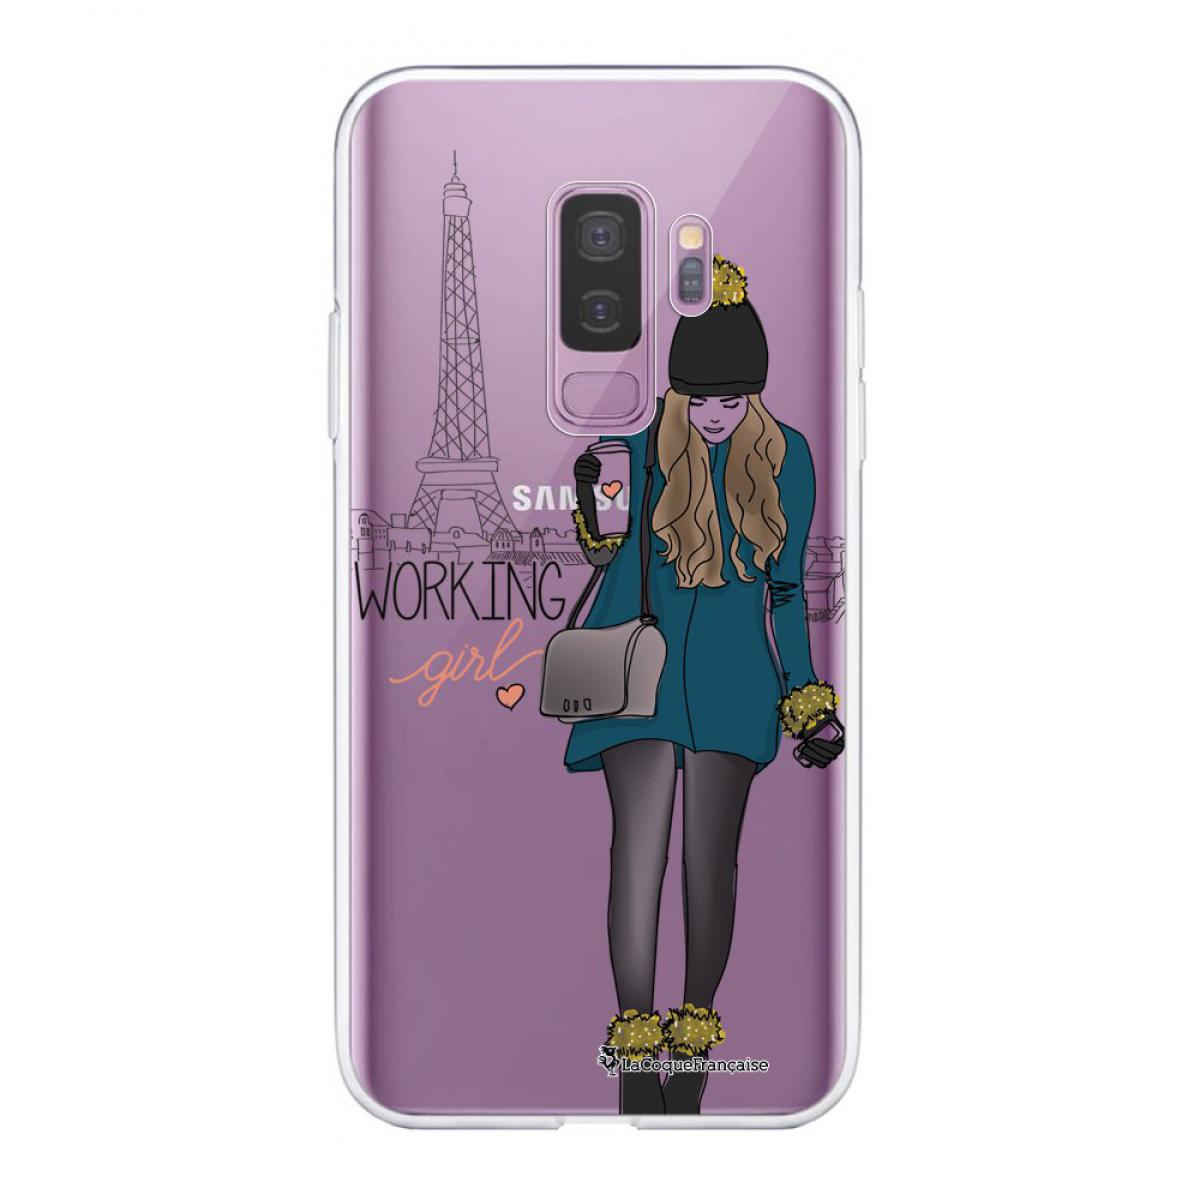 La Coque Francaise - Coque Samsung Galaxy S9 Plus souple transparente Working girl Motif Ecriture Tendance La Coque Francaise. - Coque, étui smartphone